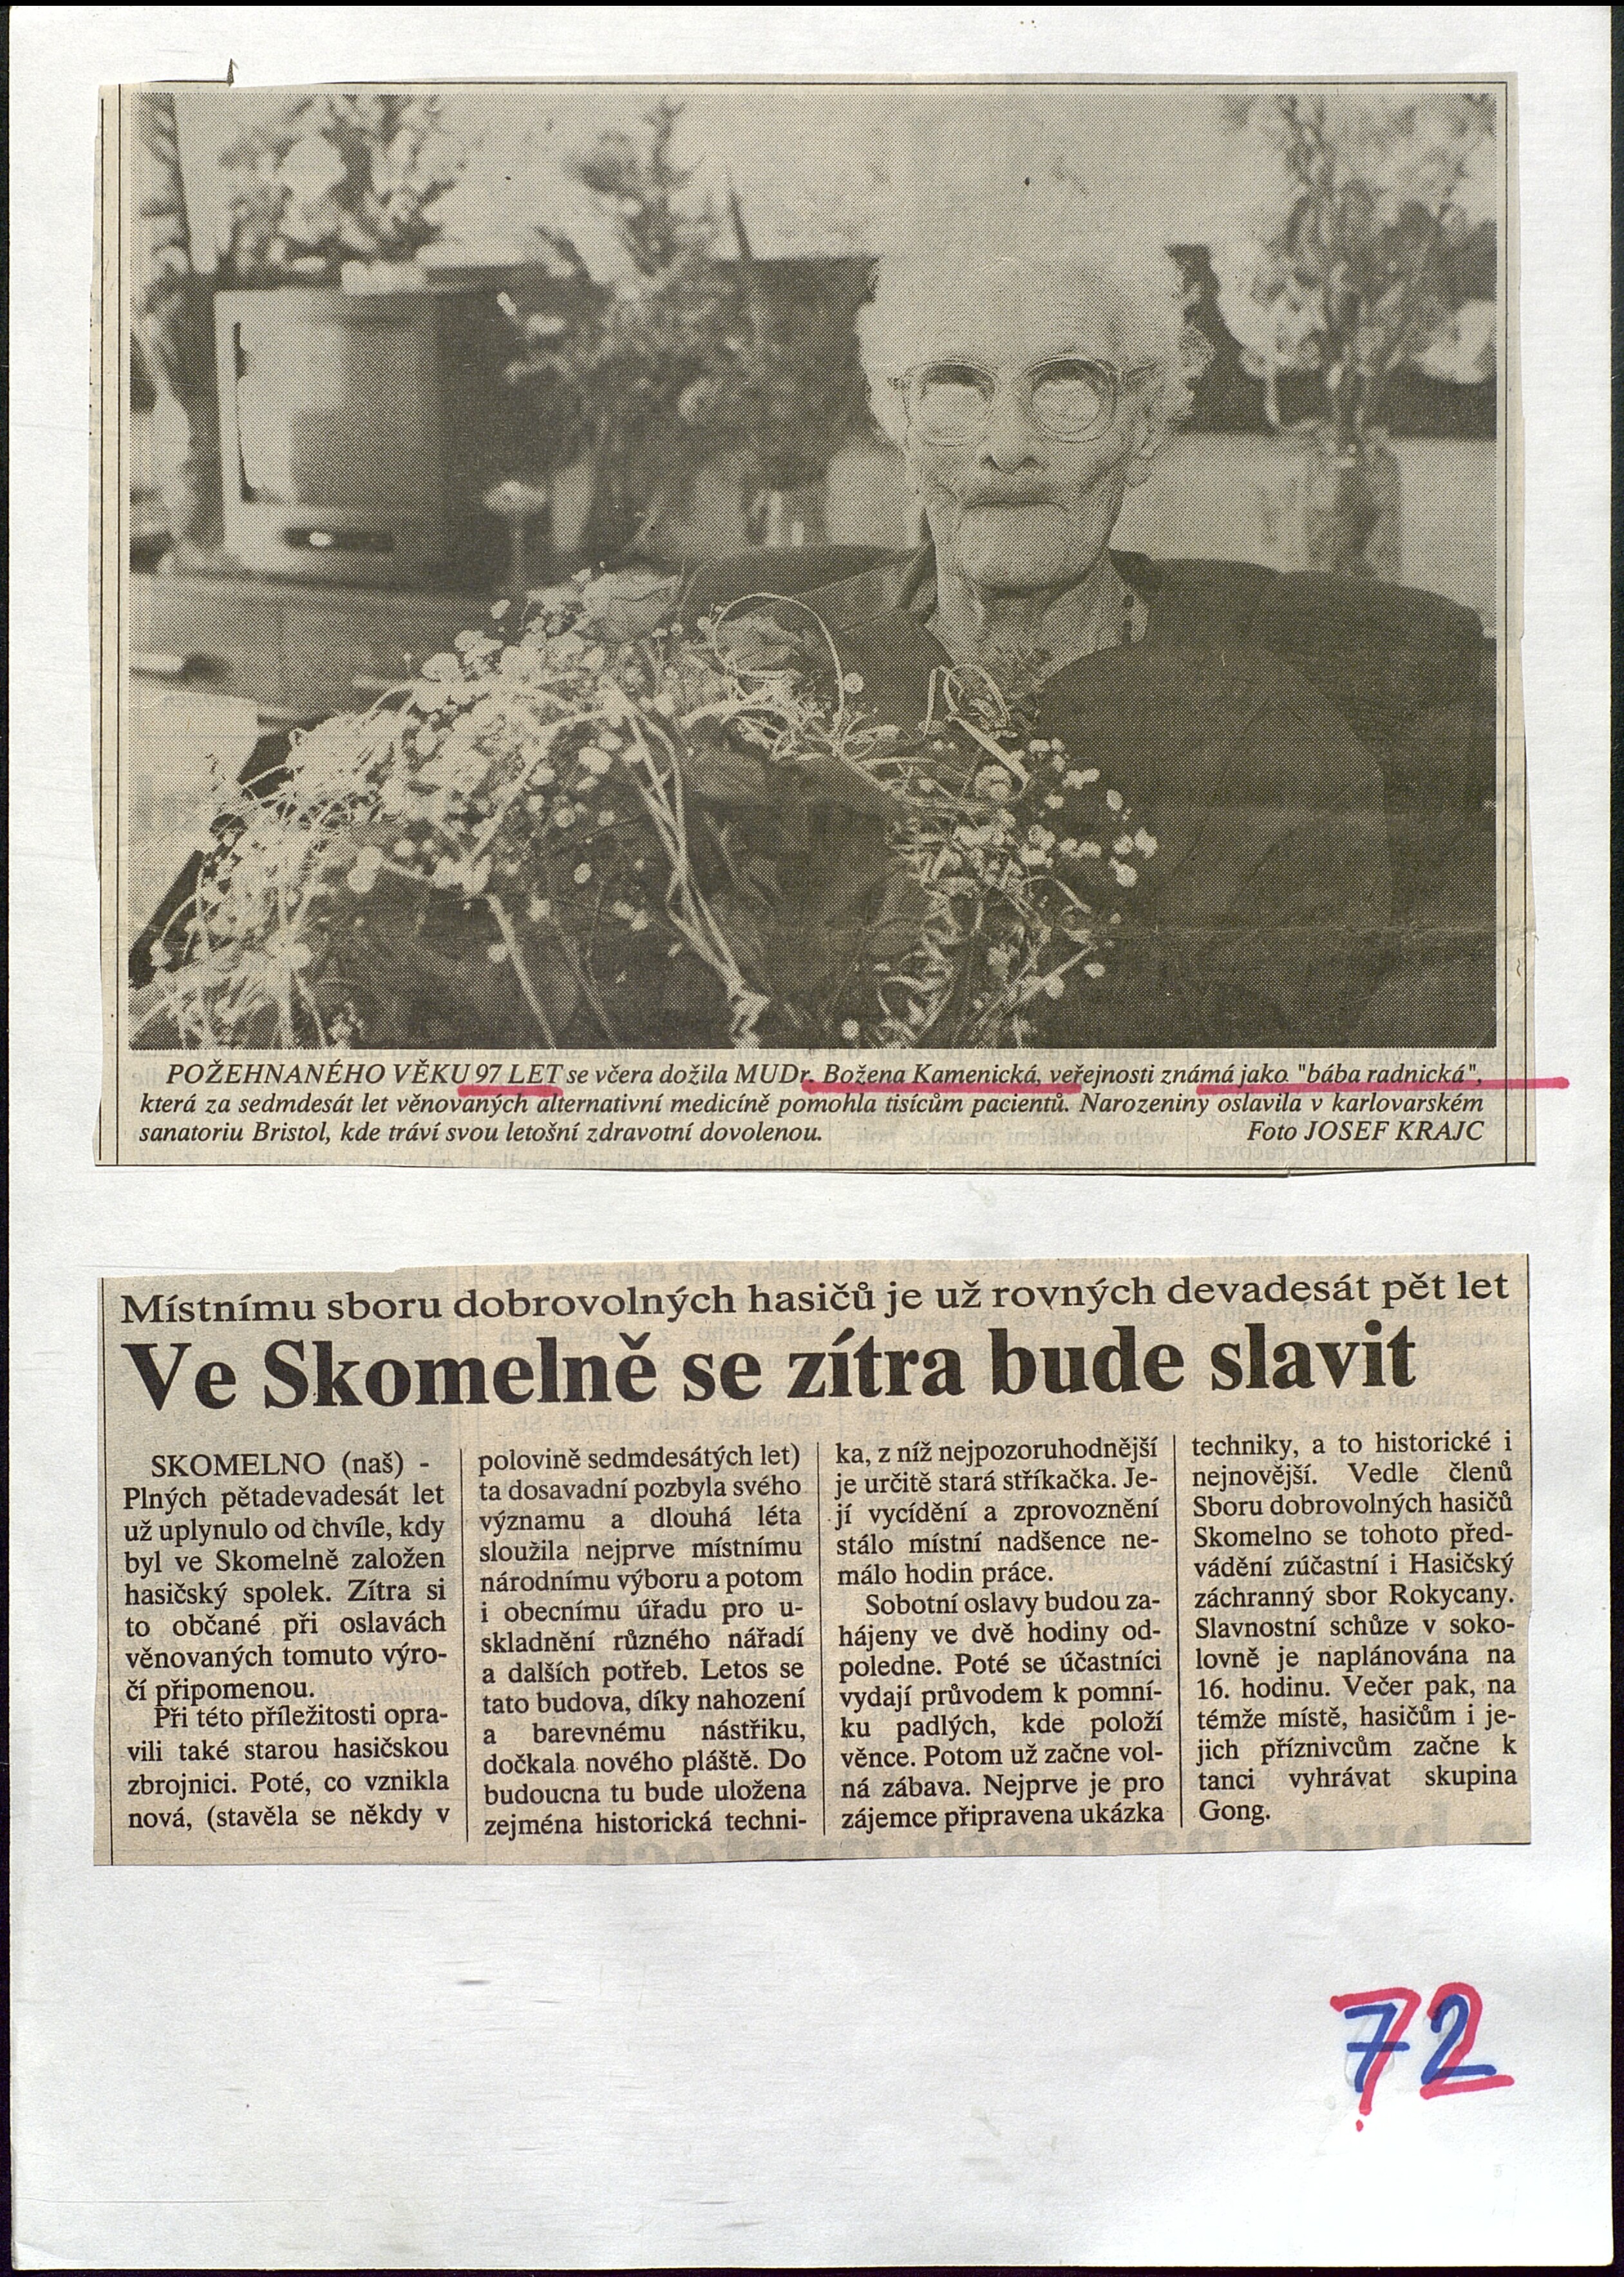 91. soap-ro_00979_mesto-radnice-priloha-1995-1998_0910